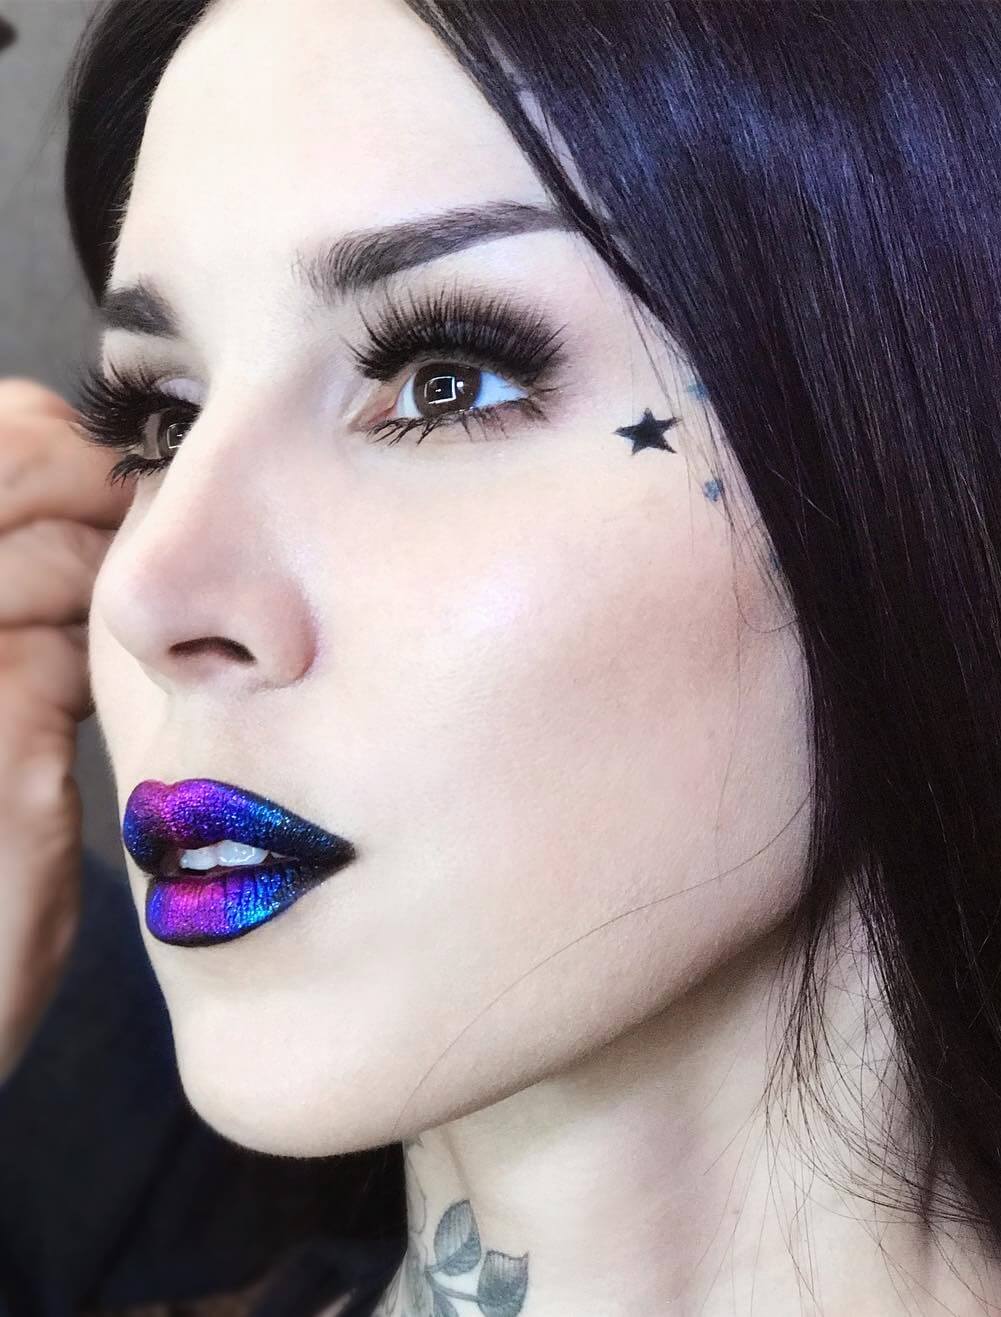 Holographic lips makeup idea by thekatvond